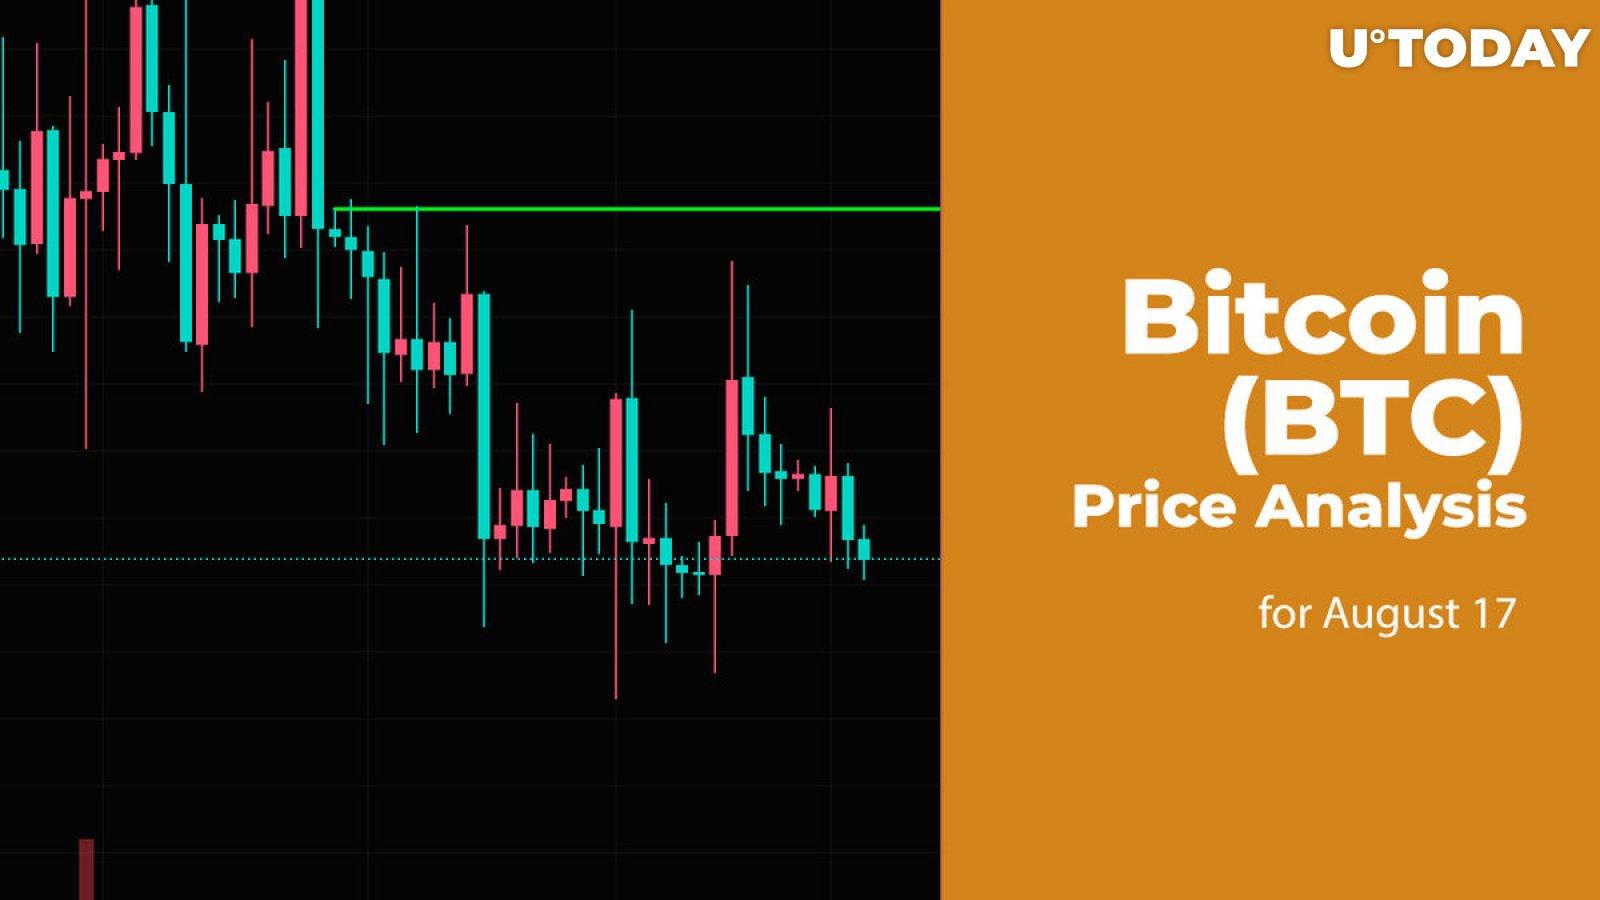 Bitcoin (BTC) Price Analysis for August 17